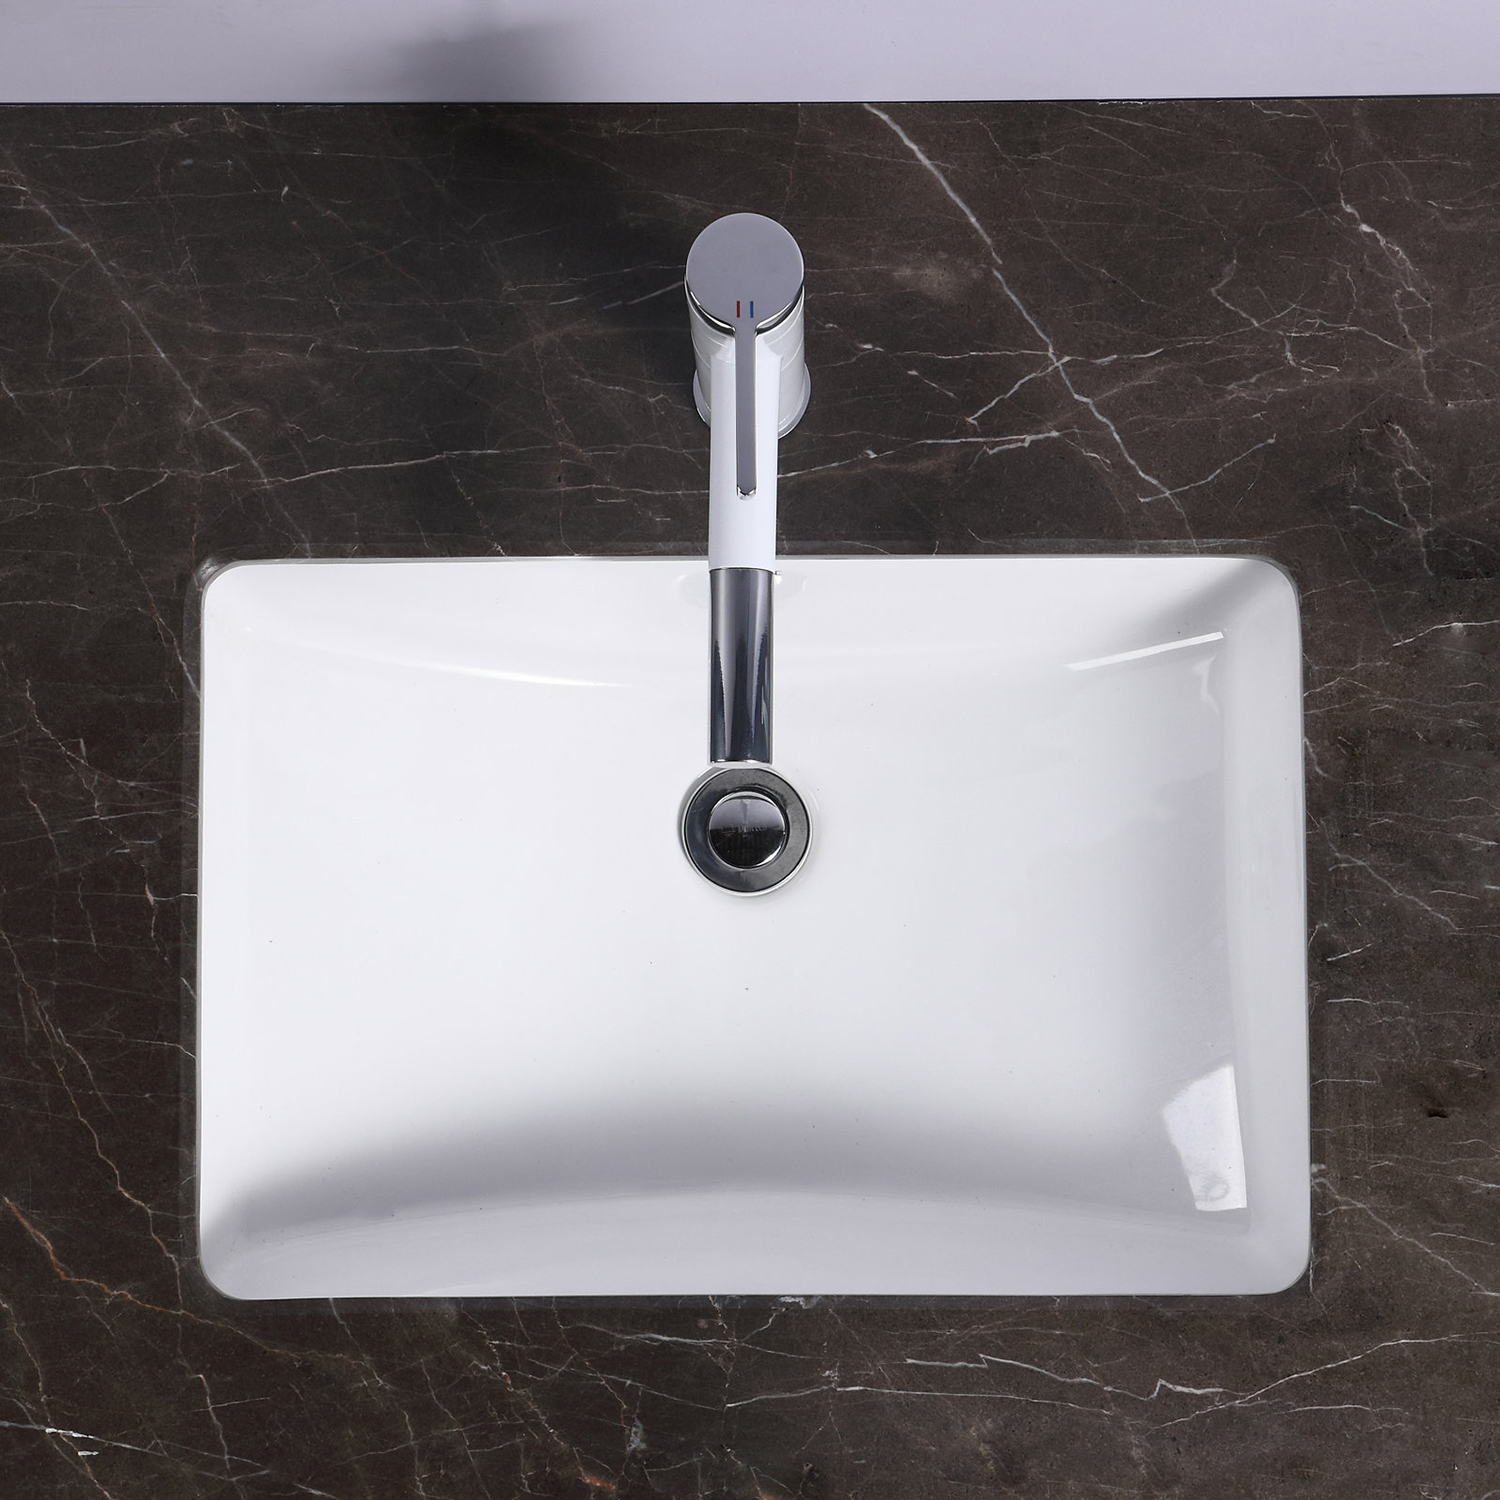 Chaozhou factory cheap ceramic rectangular undermount bathroom sink washbasin